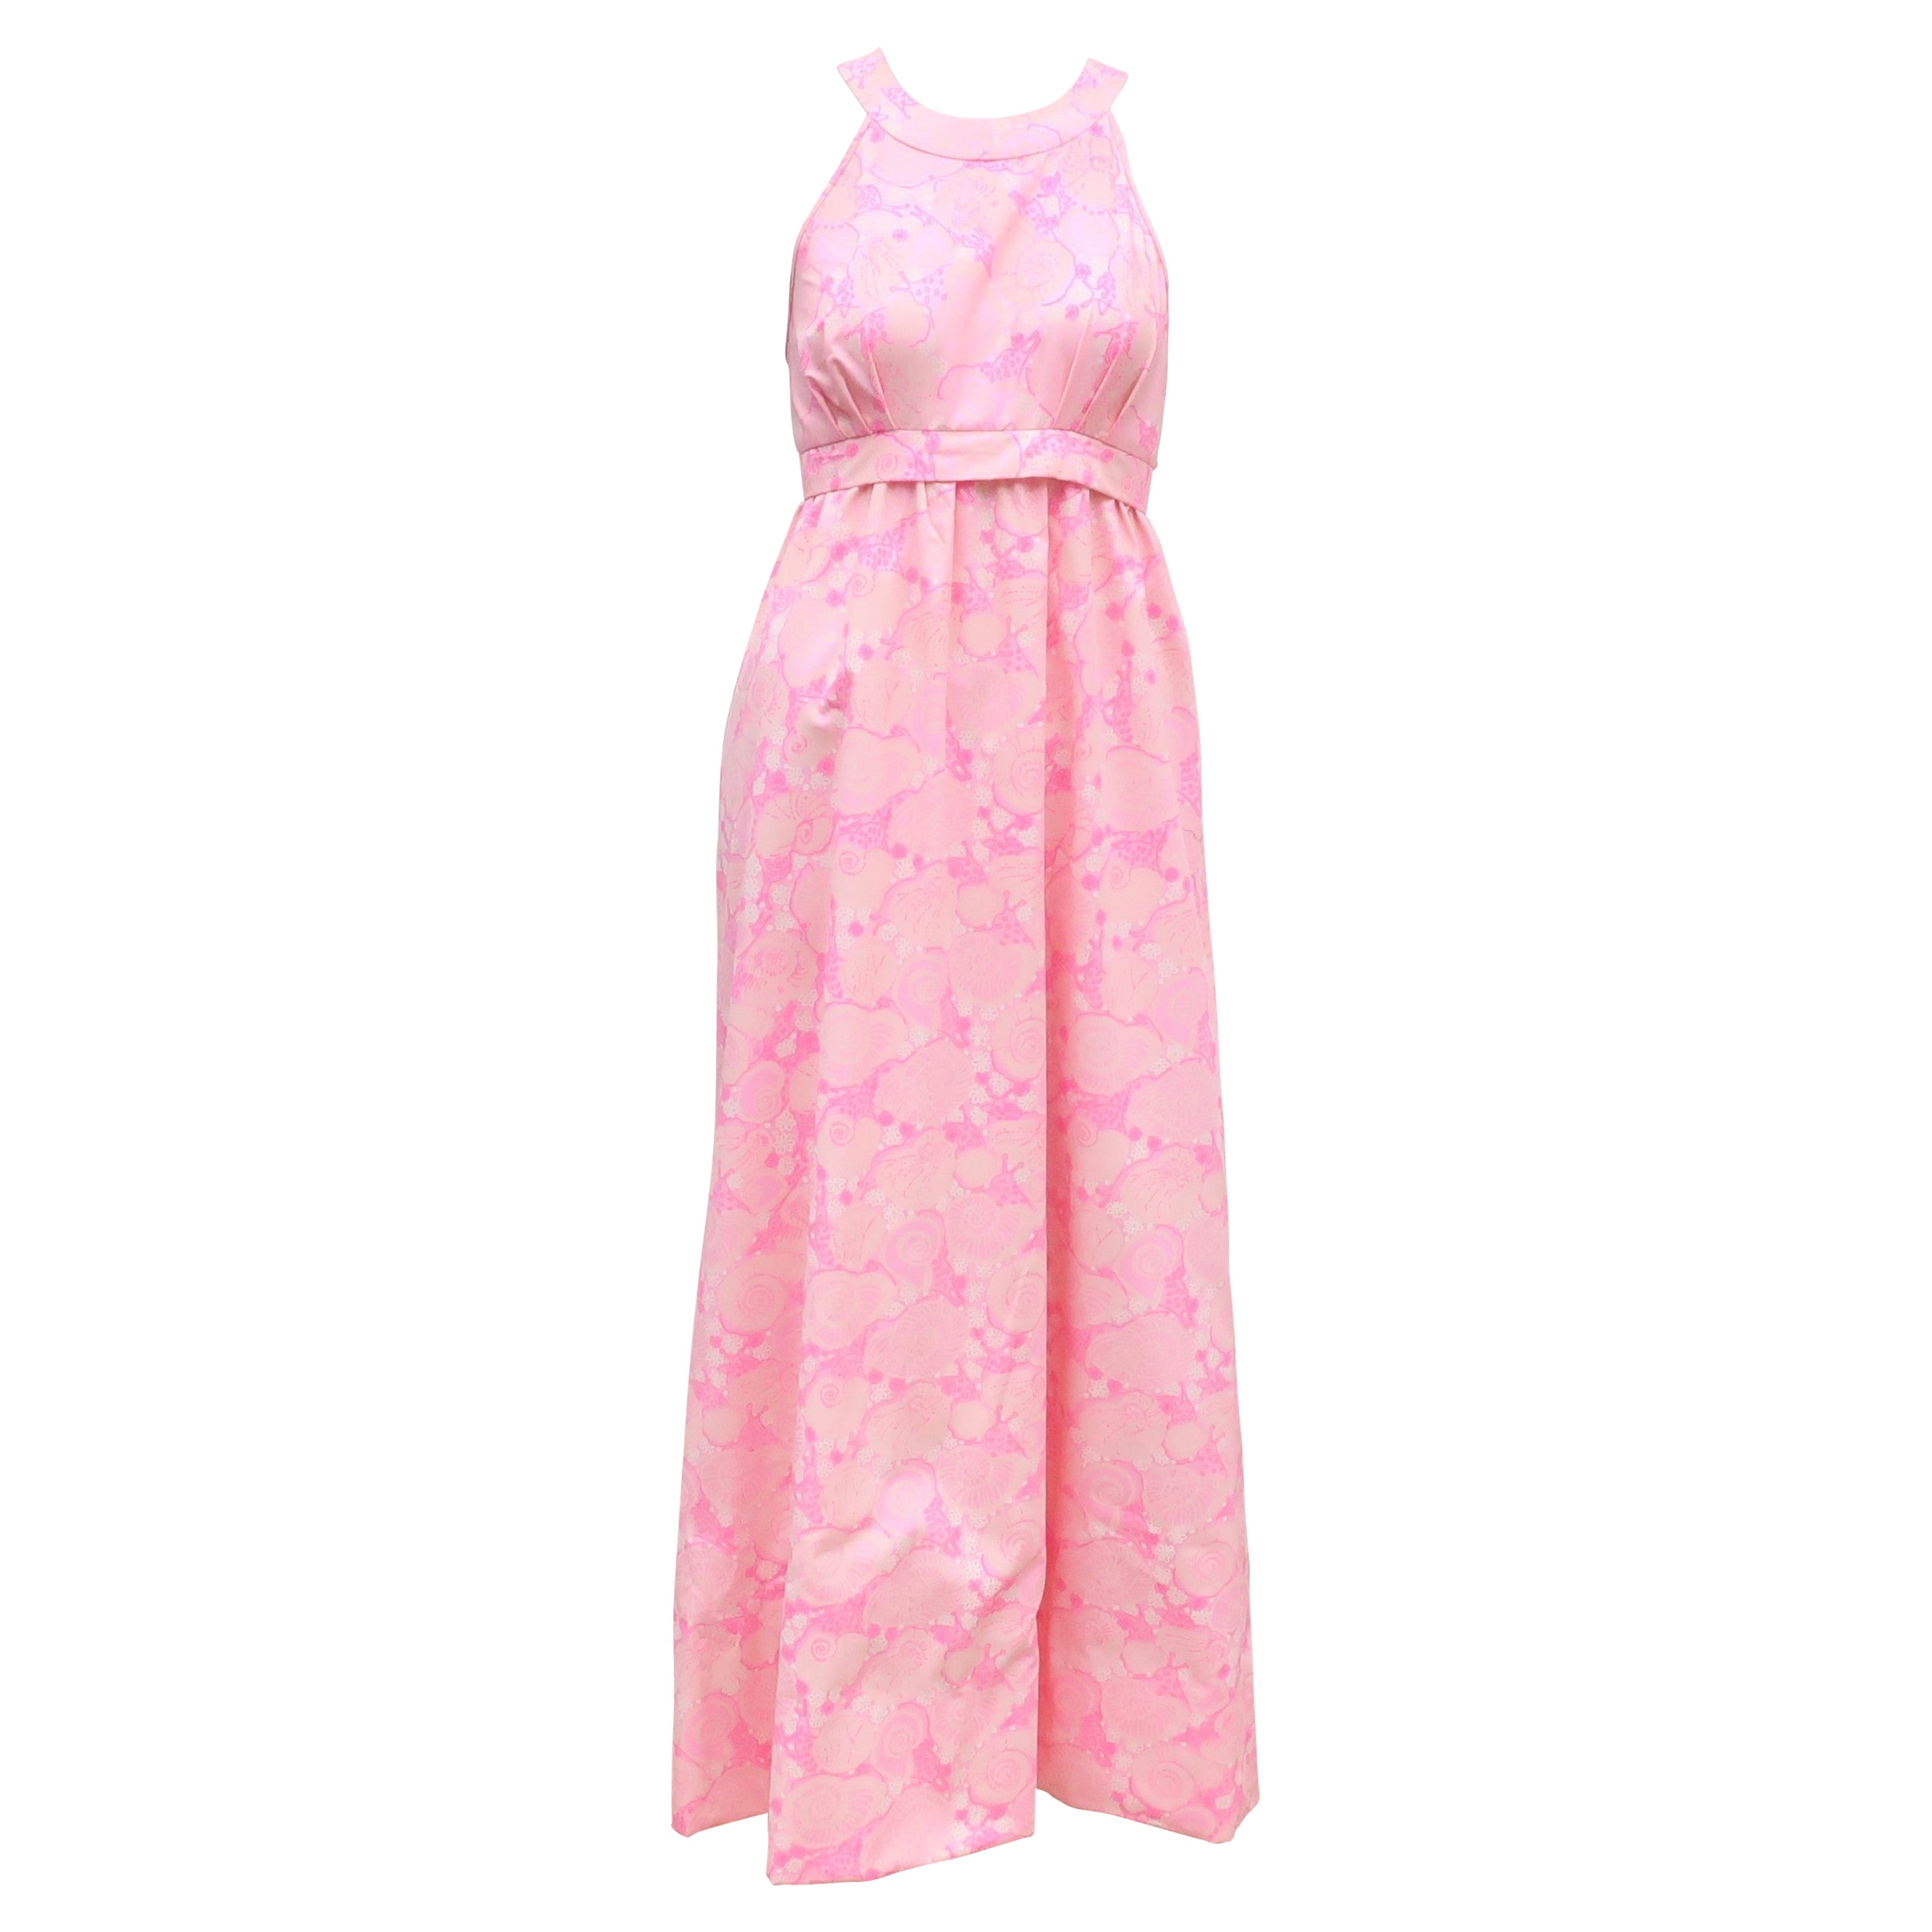 Lilly Pulitzer Pink Snail Print Halter Maxi Dress, 1960's